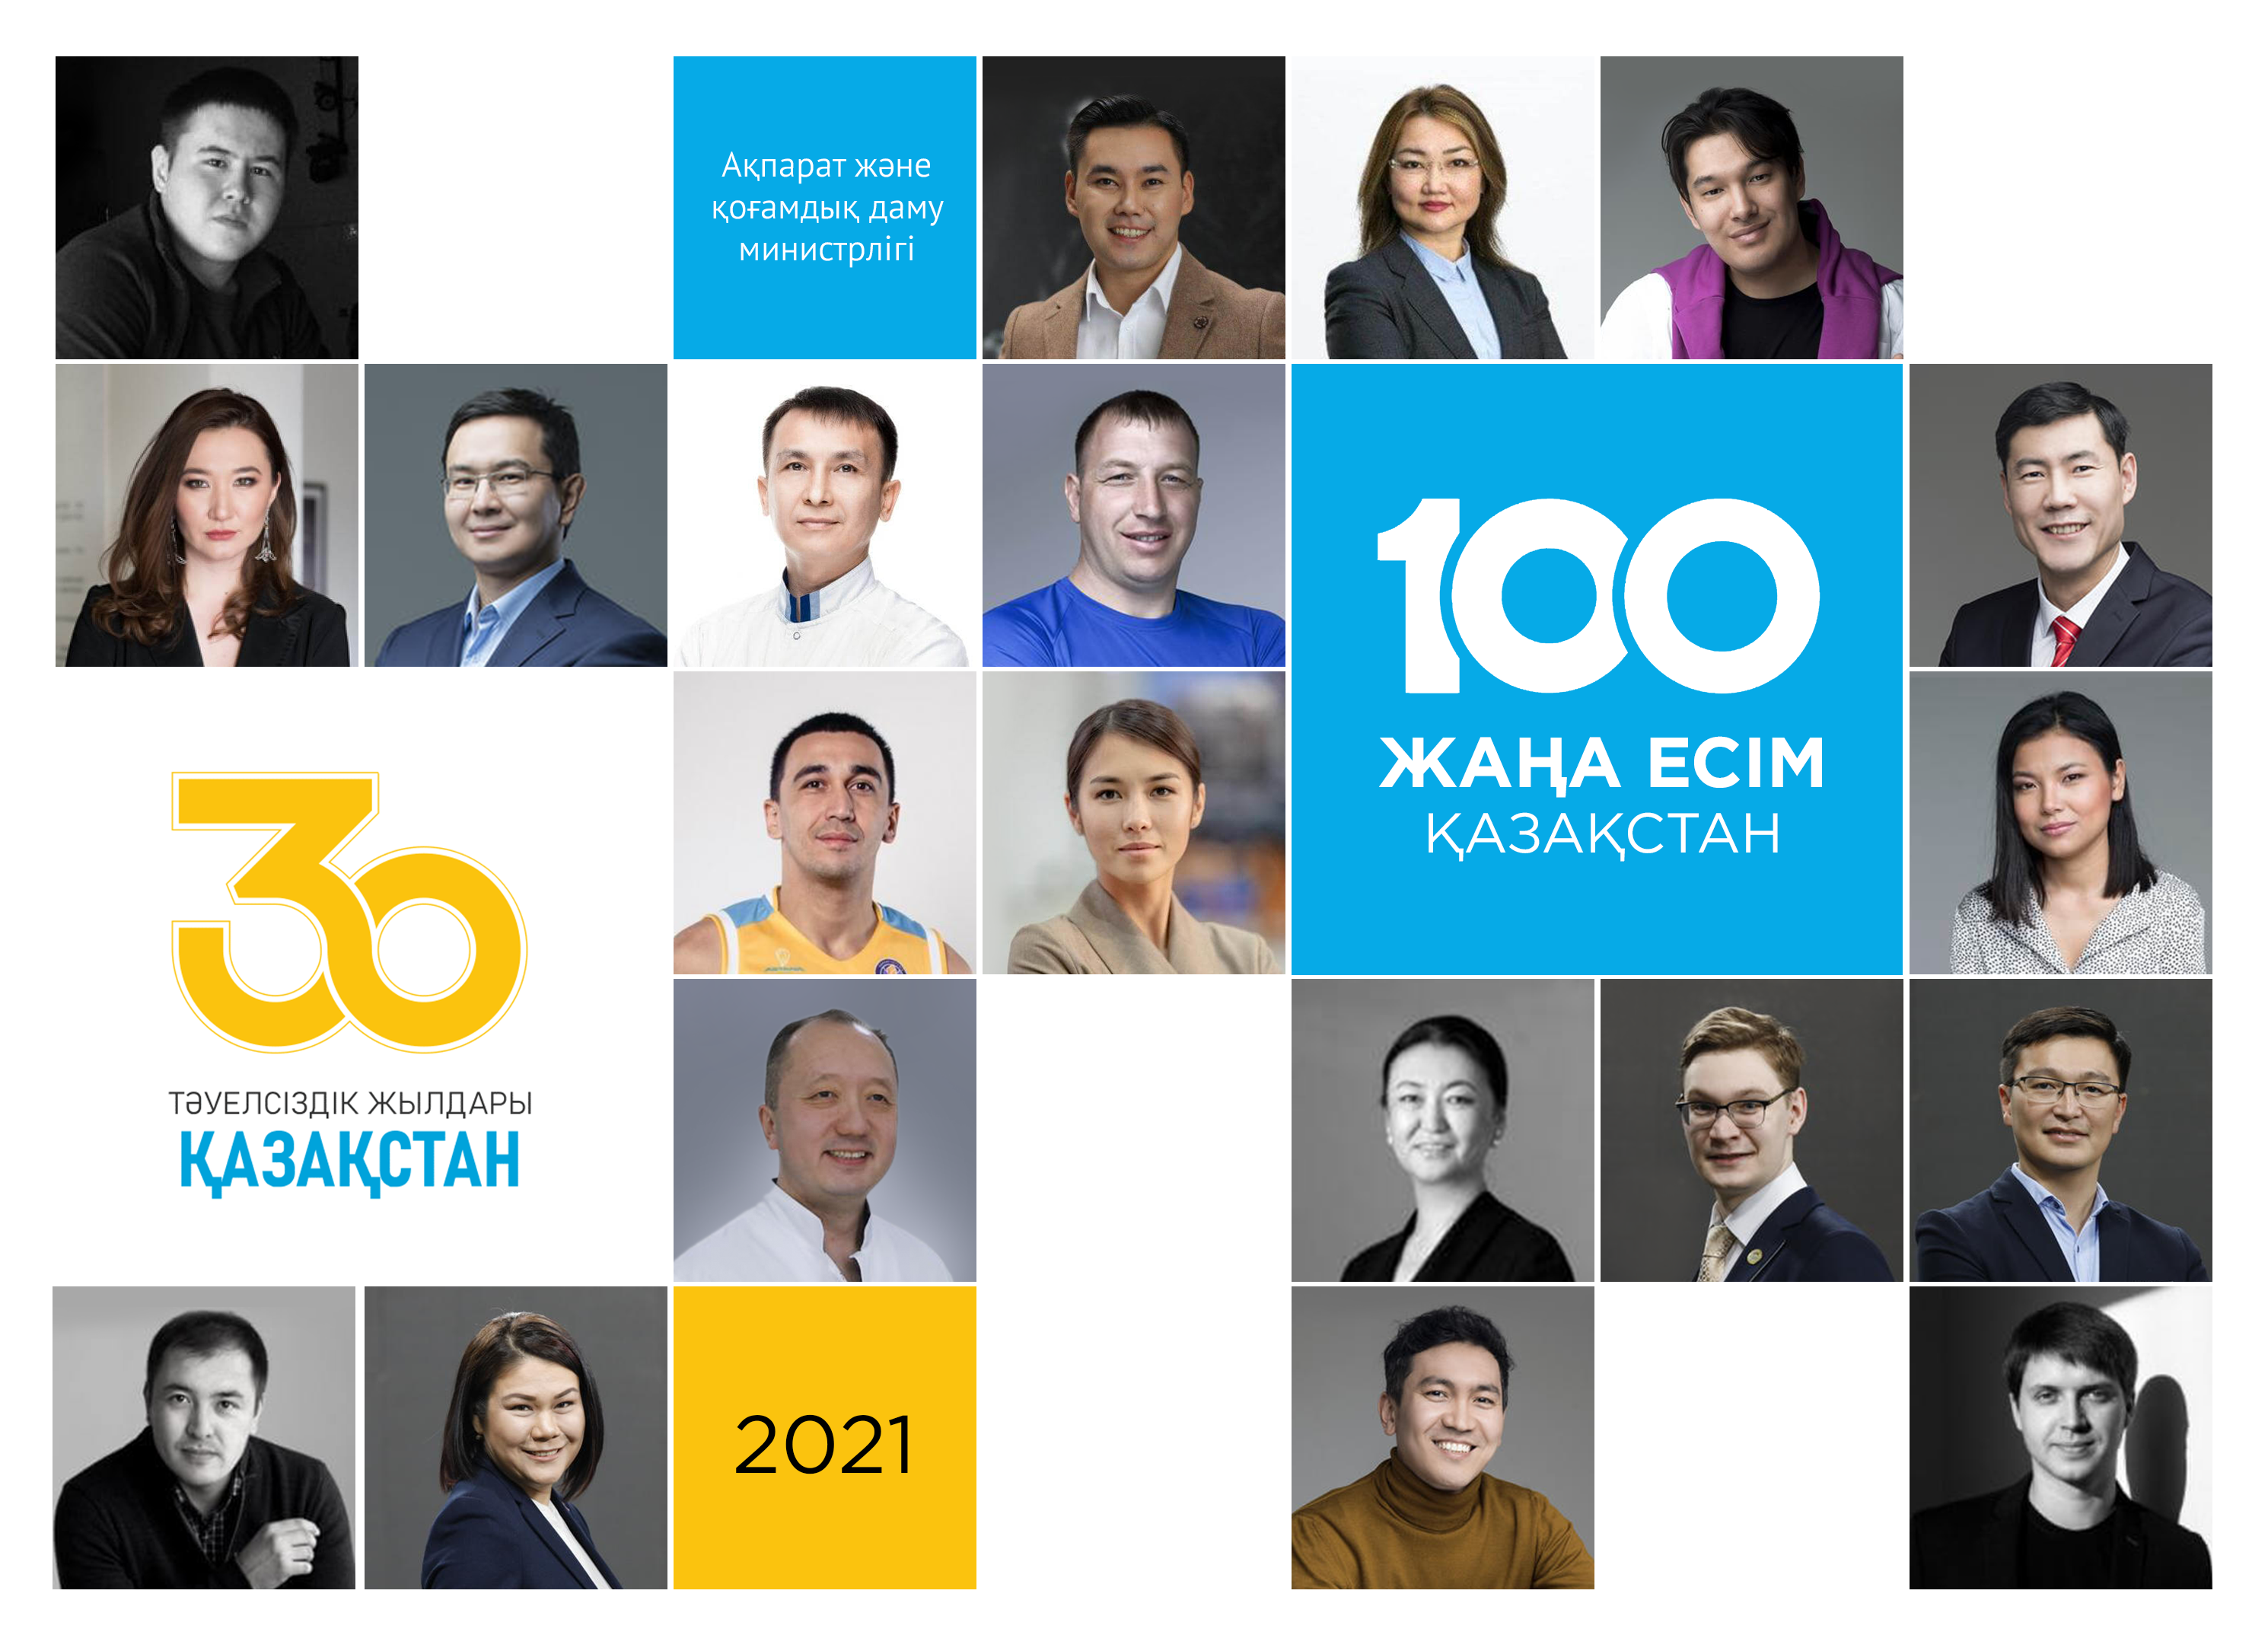 100 New Faces of Kazakhstan